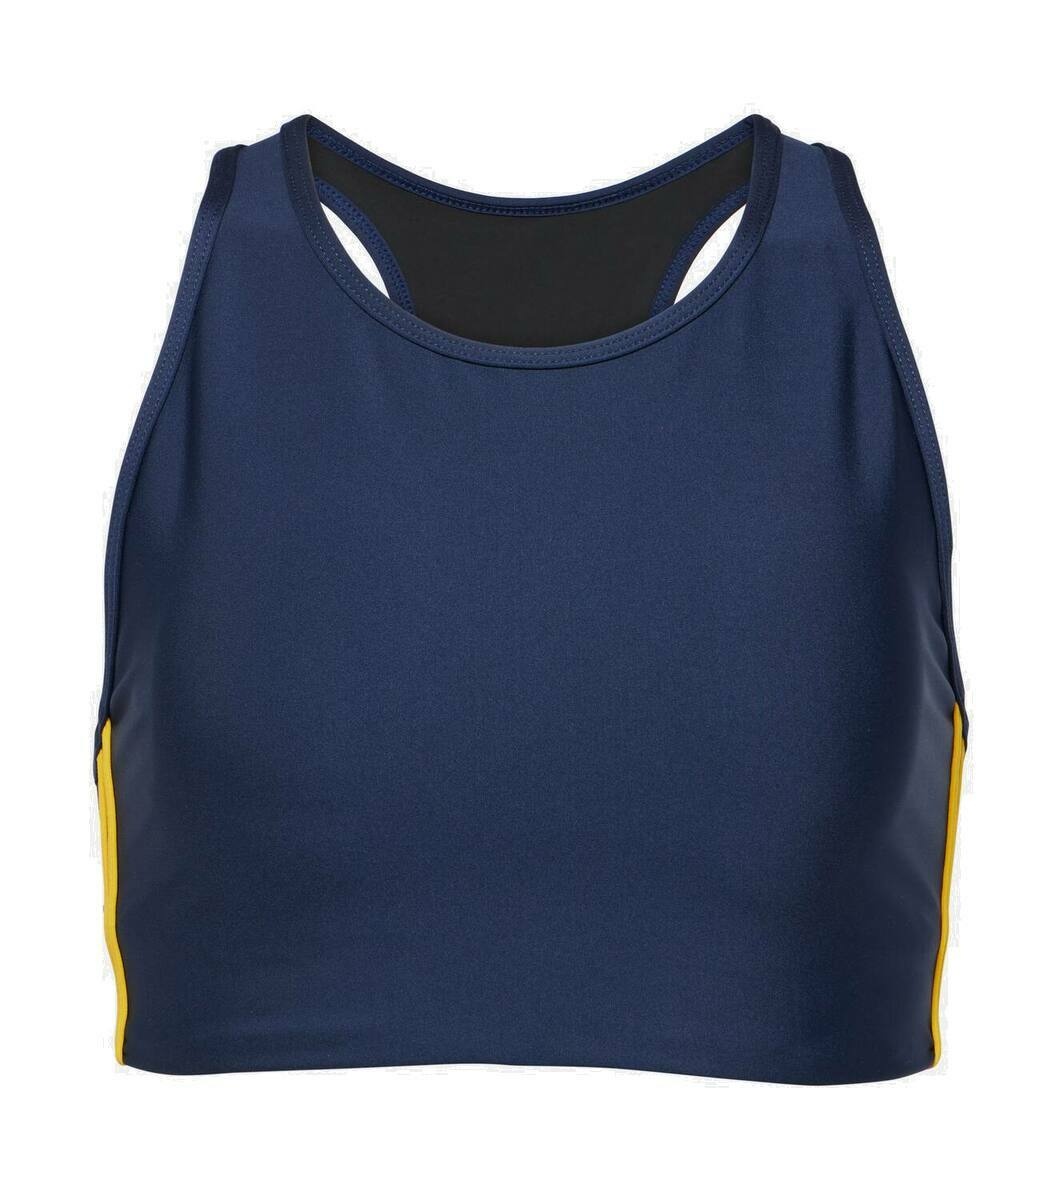 Photo: The Upside Oxford Nora sports bra